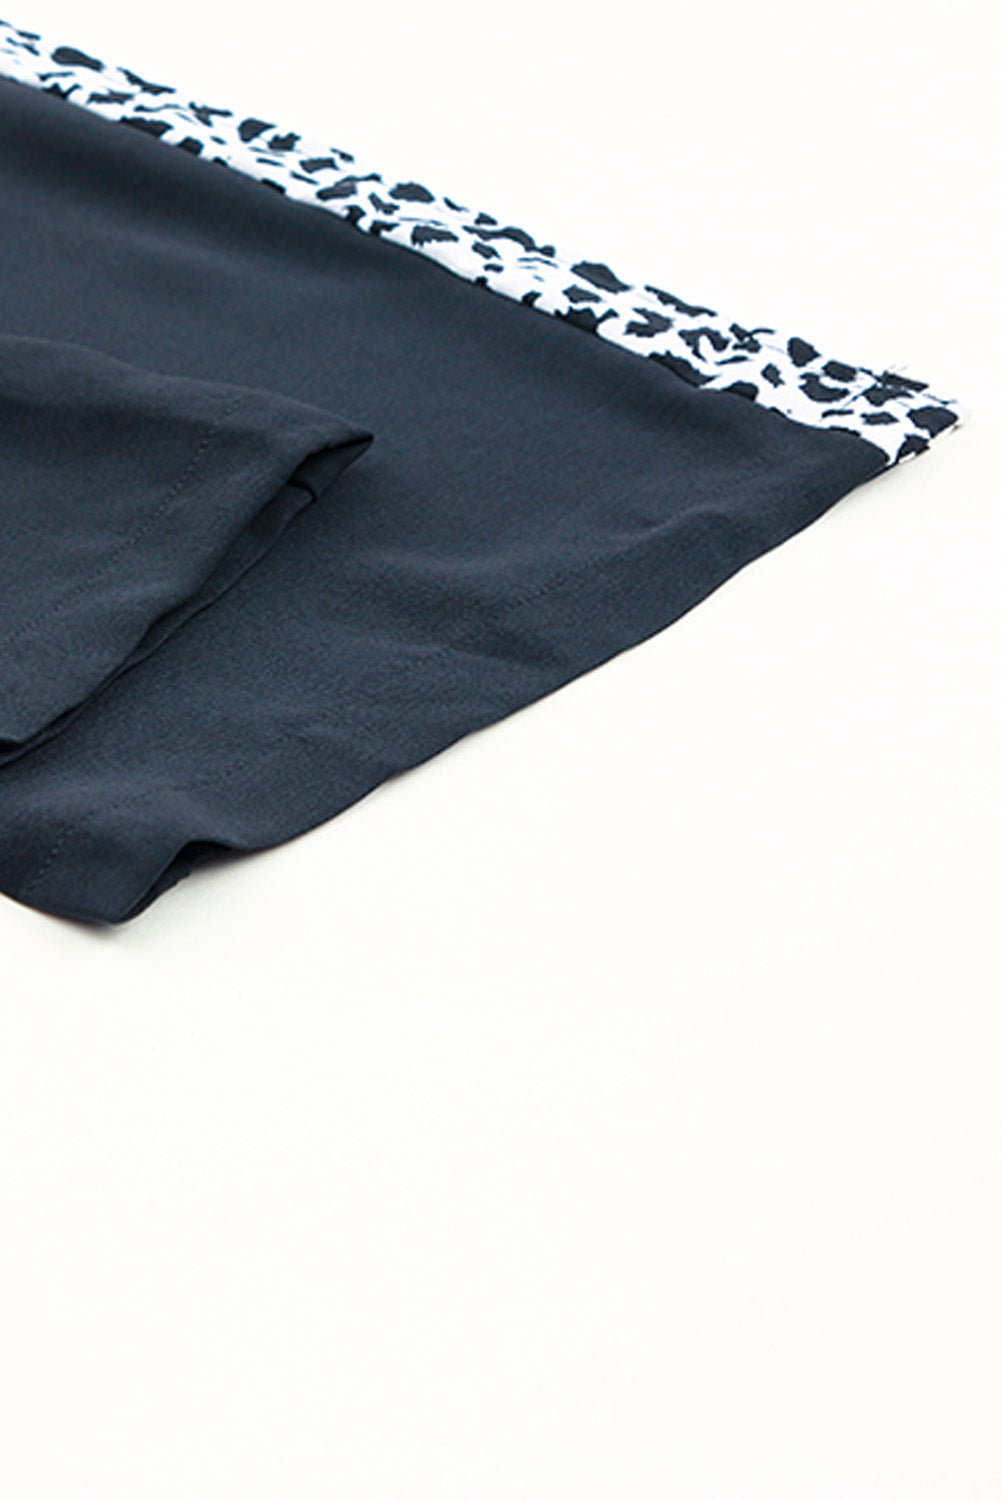 Kombinezon širokih nogavica s crnim leopard patchwork naramenicama